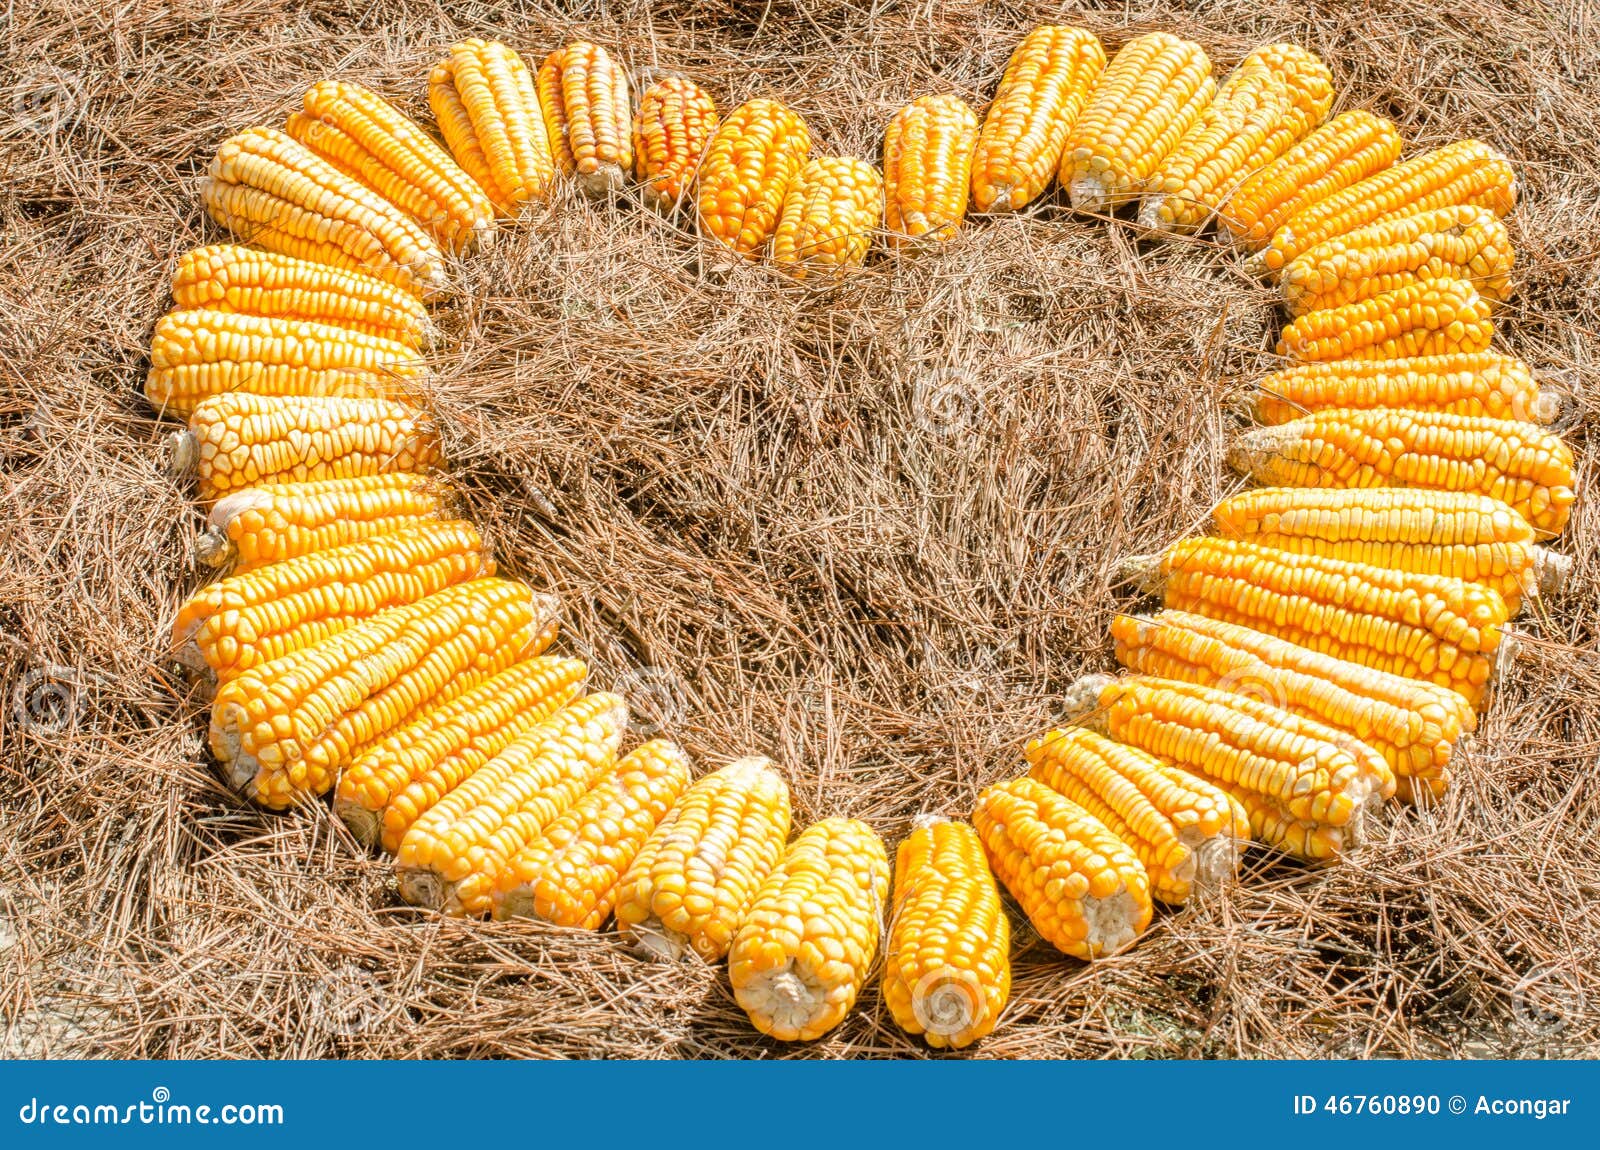 heart of corn